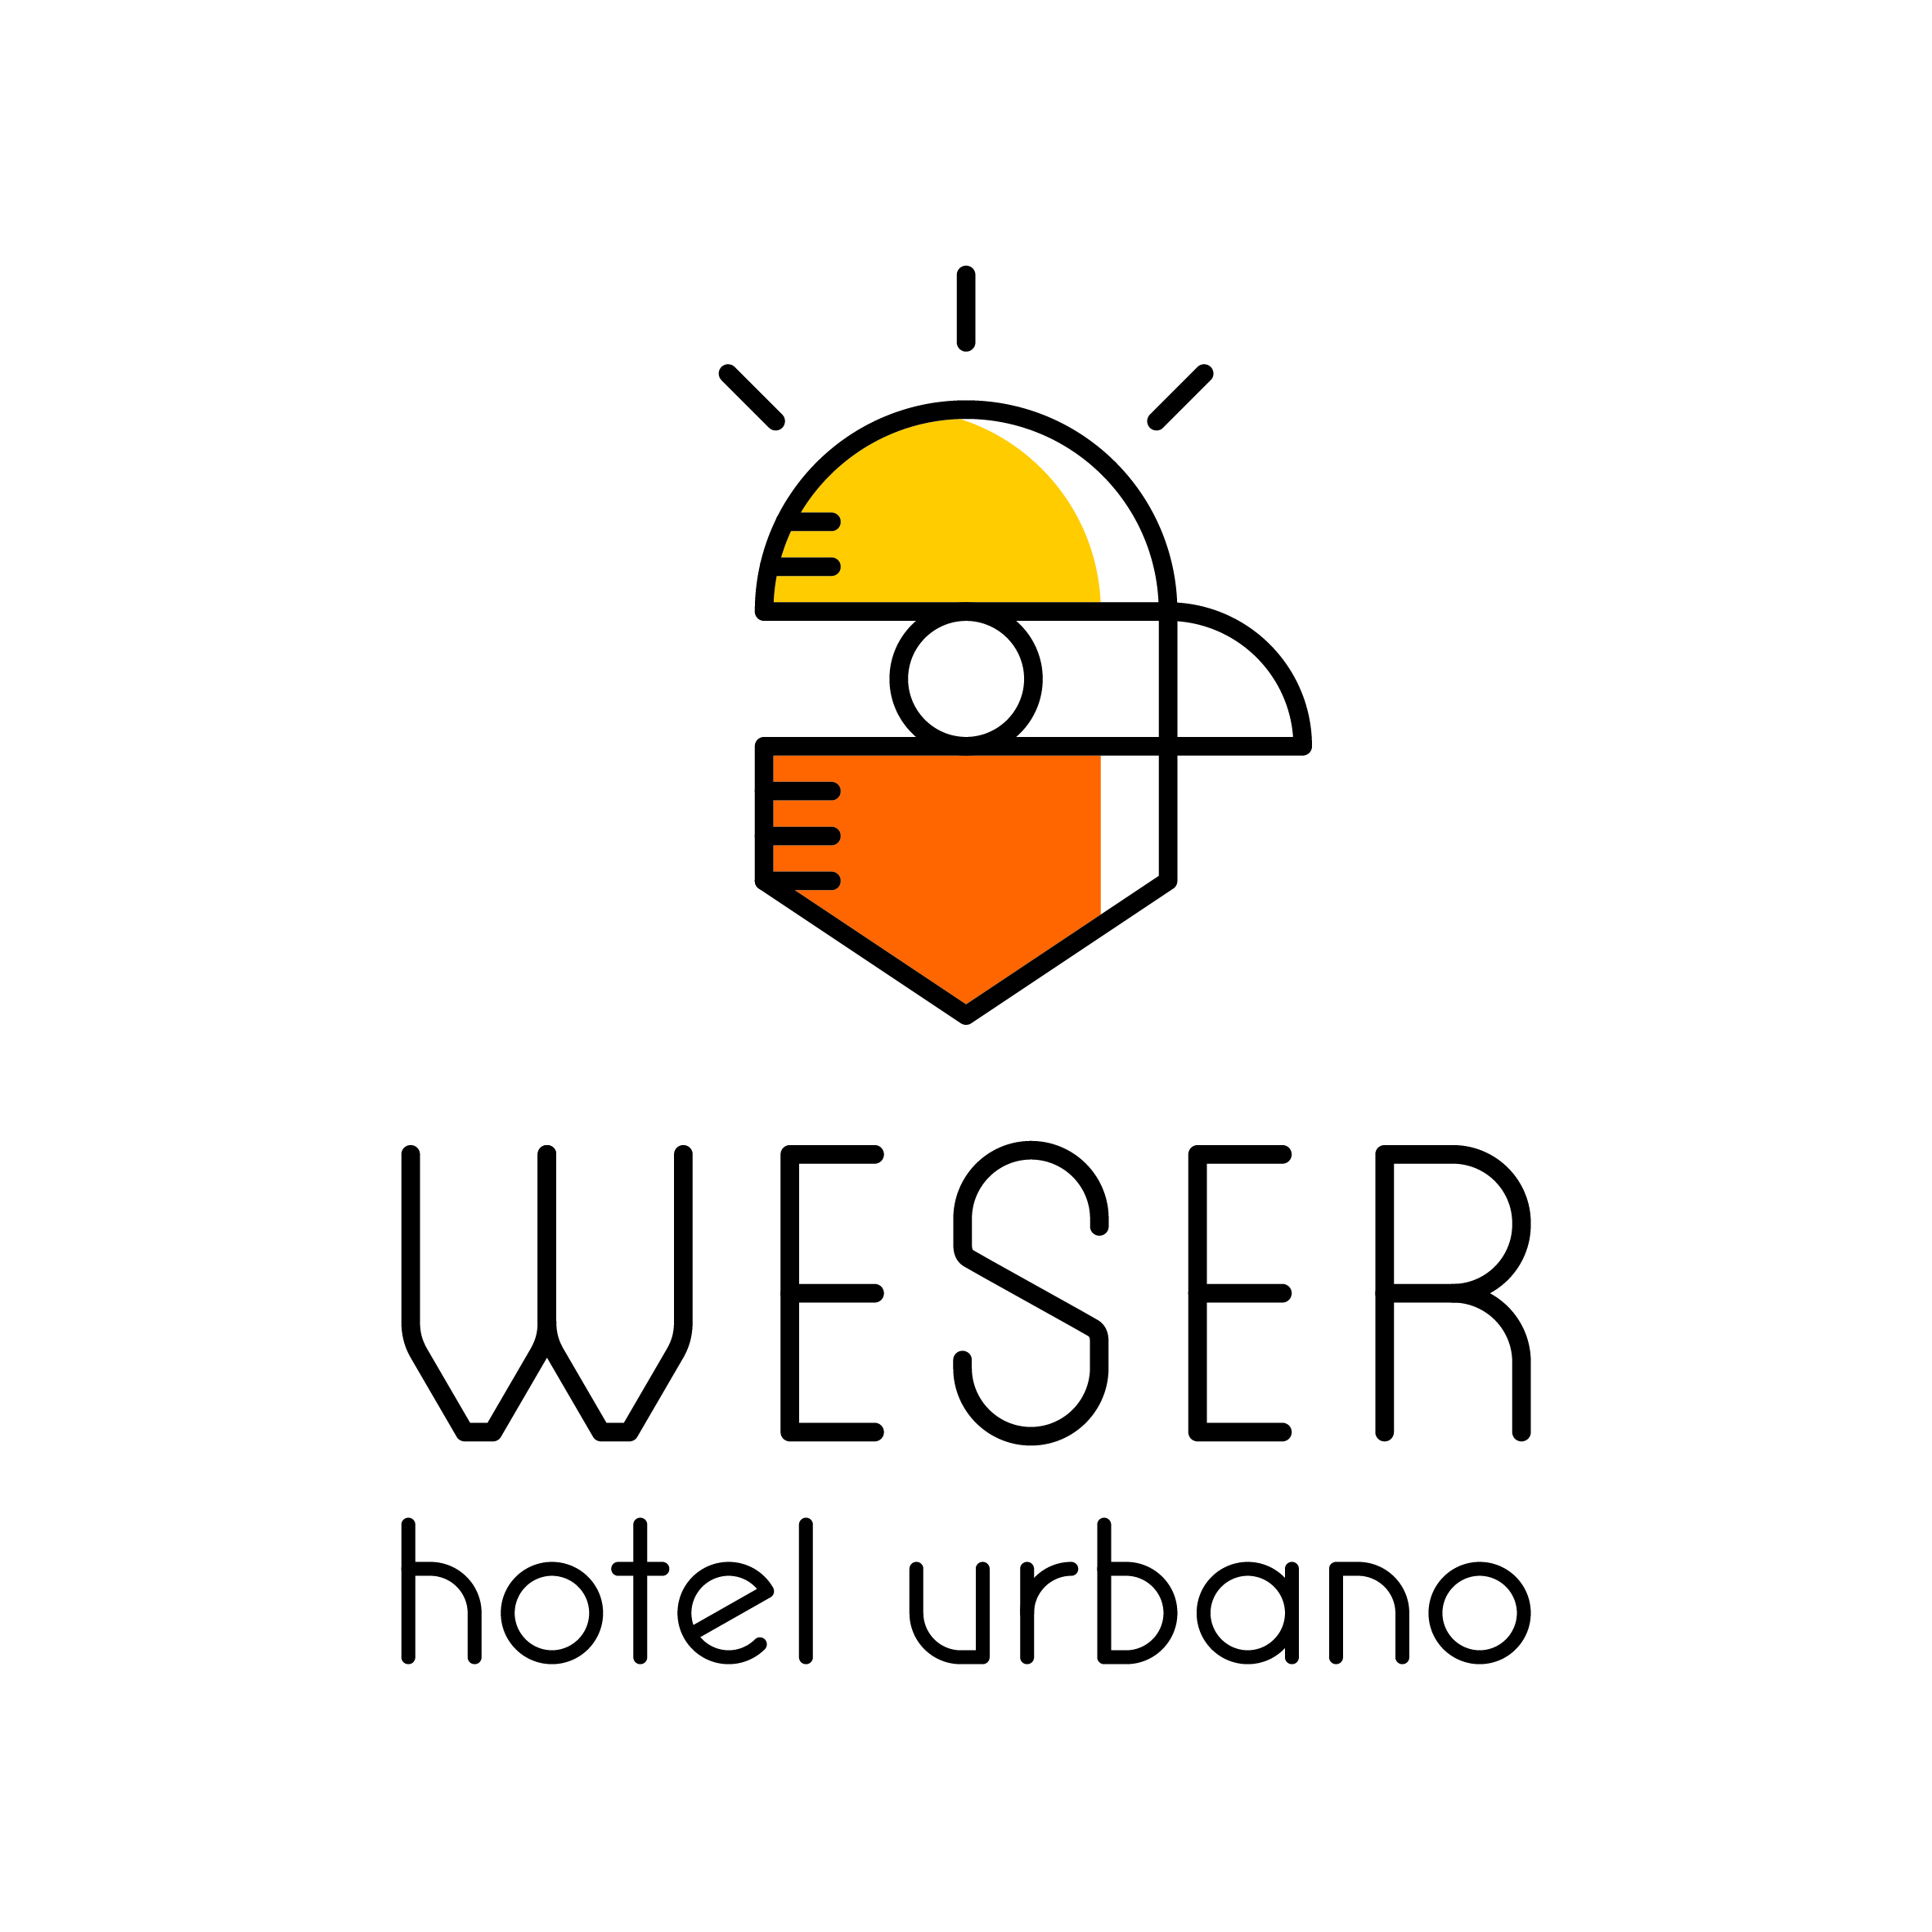 Hotel urbano Weser by David sampedro Escobar - Creative Work